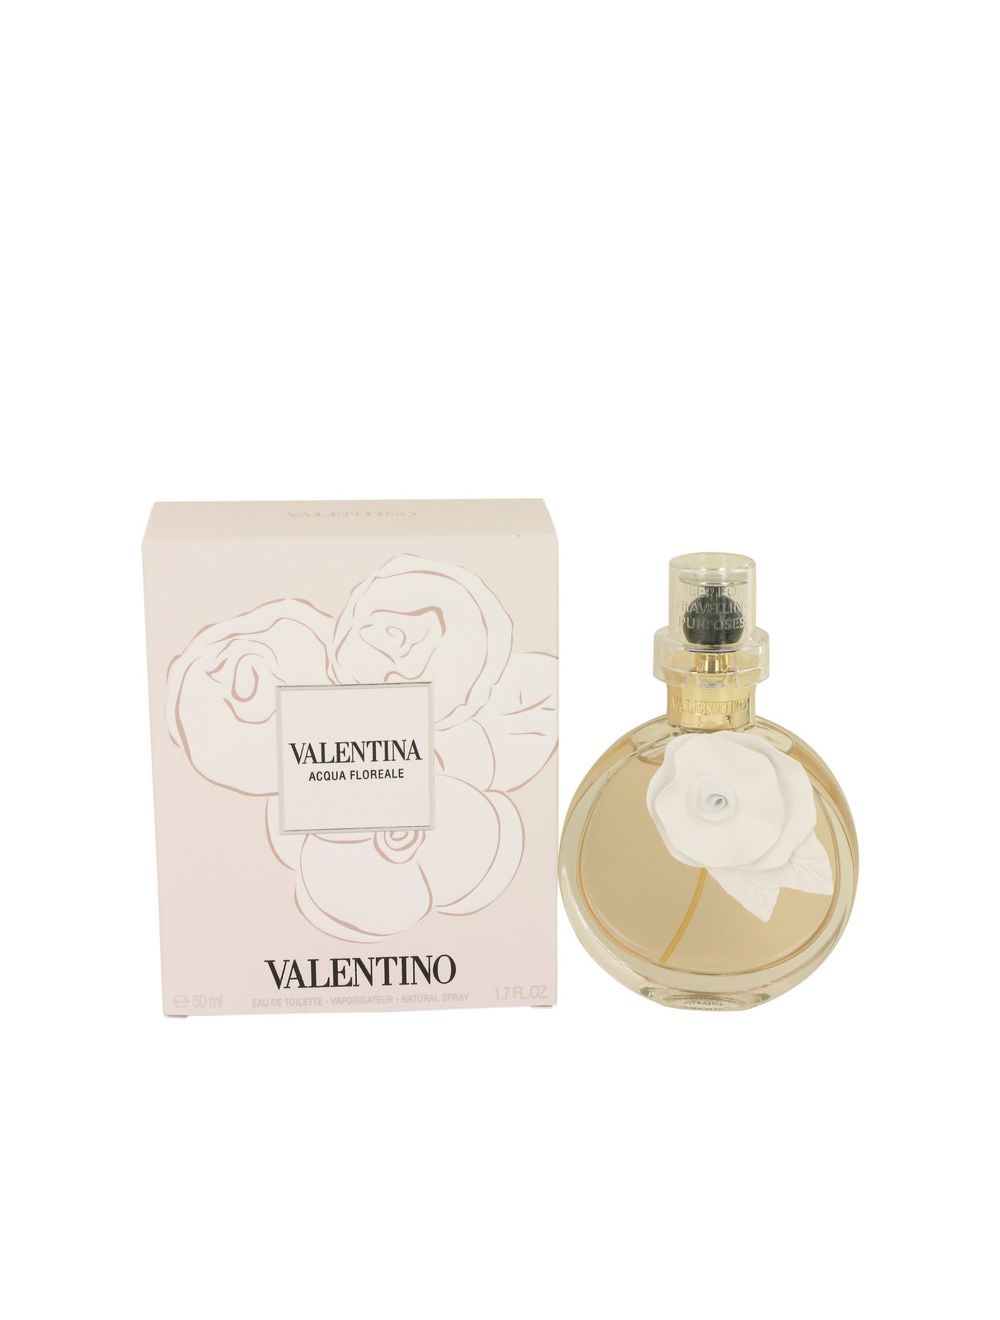 Canada Online Perfumes Shop  Buy Fragrances Valentina Acqua Floreale  Perfume By Valentino Eau De Toilette Spray